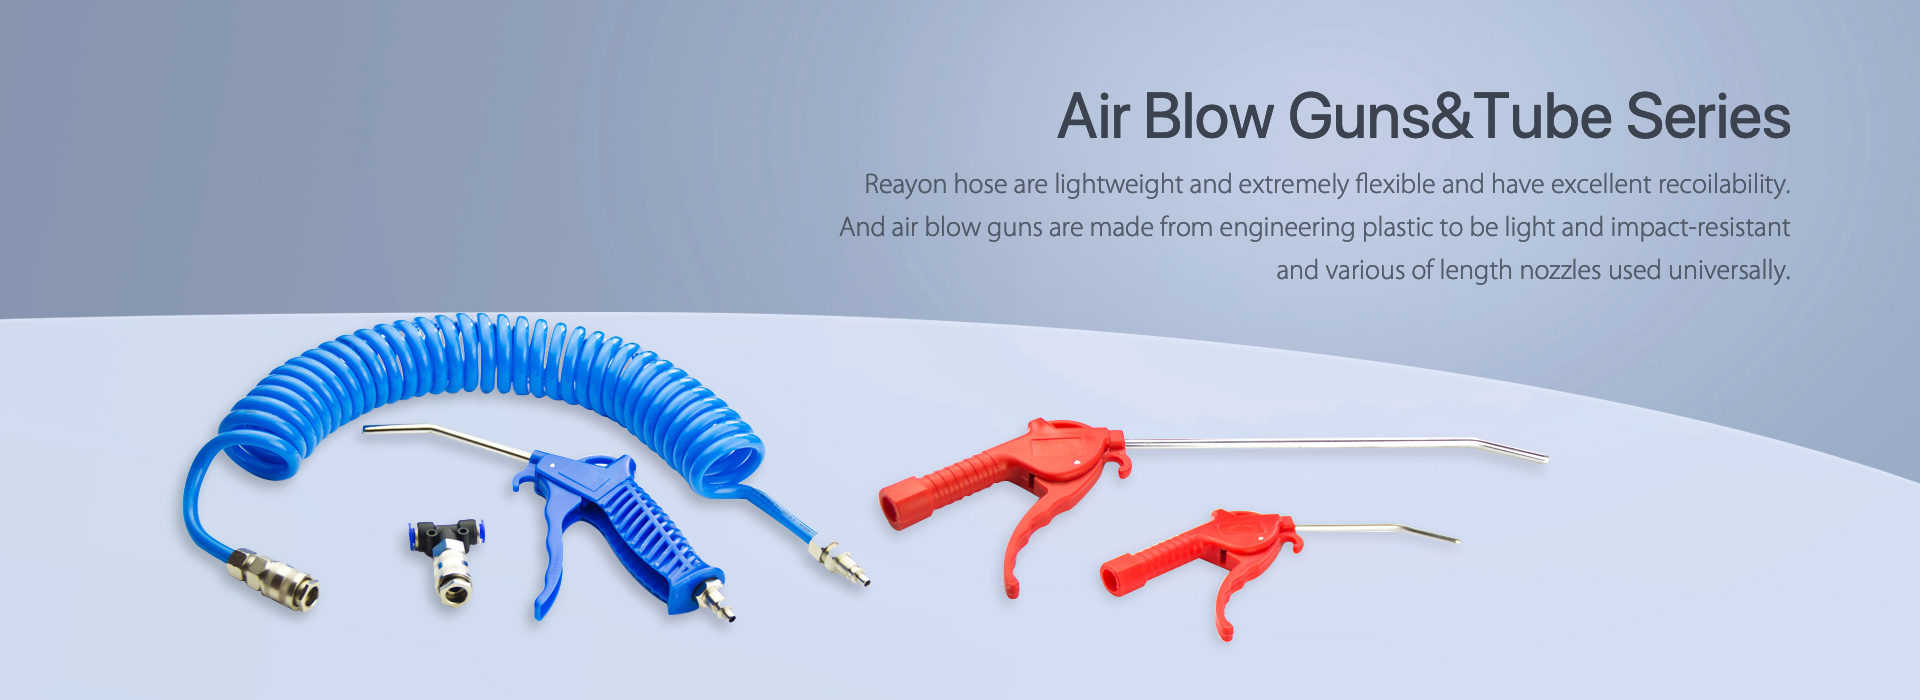 Air-Blow-GunsTube-Series